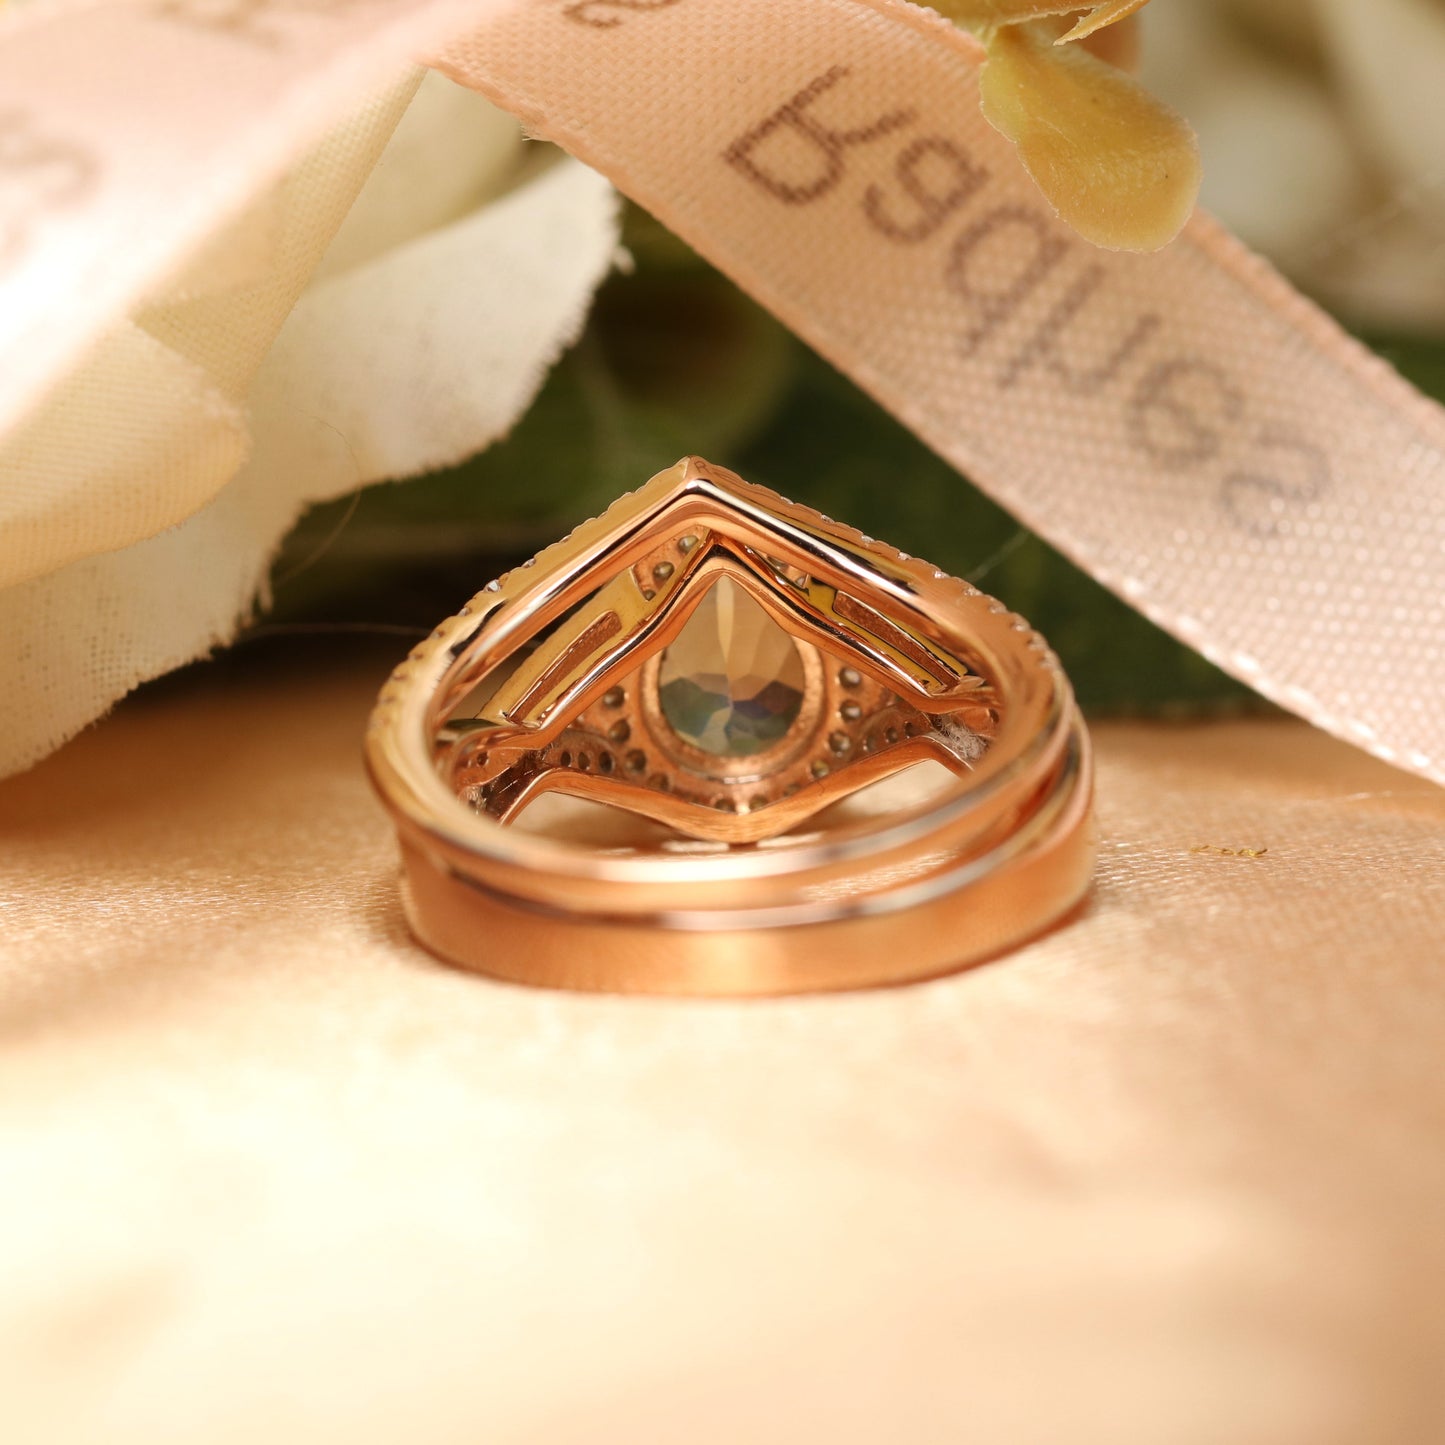 Huge 1.7 carat Natural rainbow Moonstone Halo Teardrop Vintage Chevron Wedding Ring Set with Diamond in Rose Gold